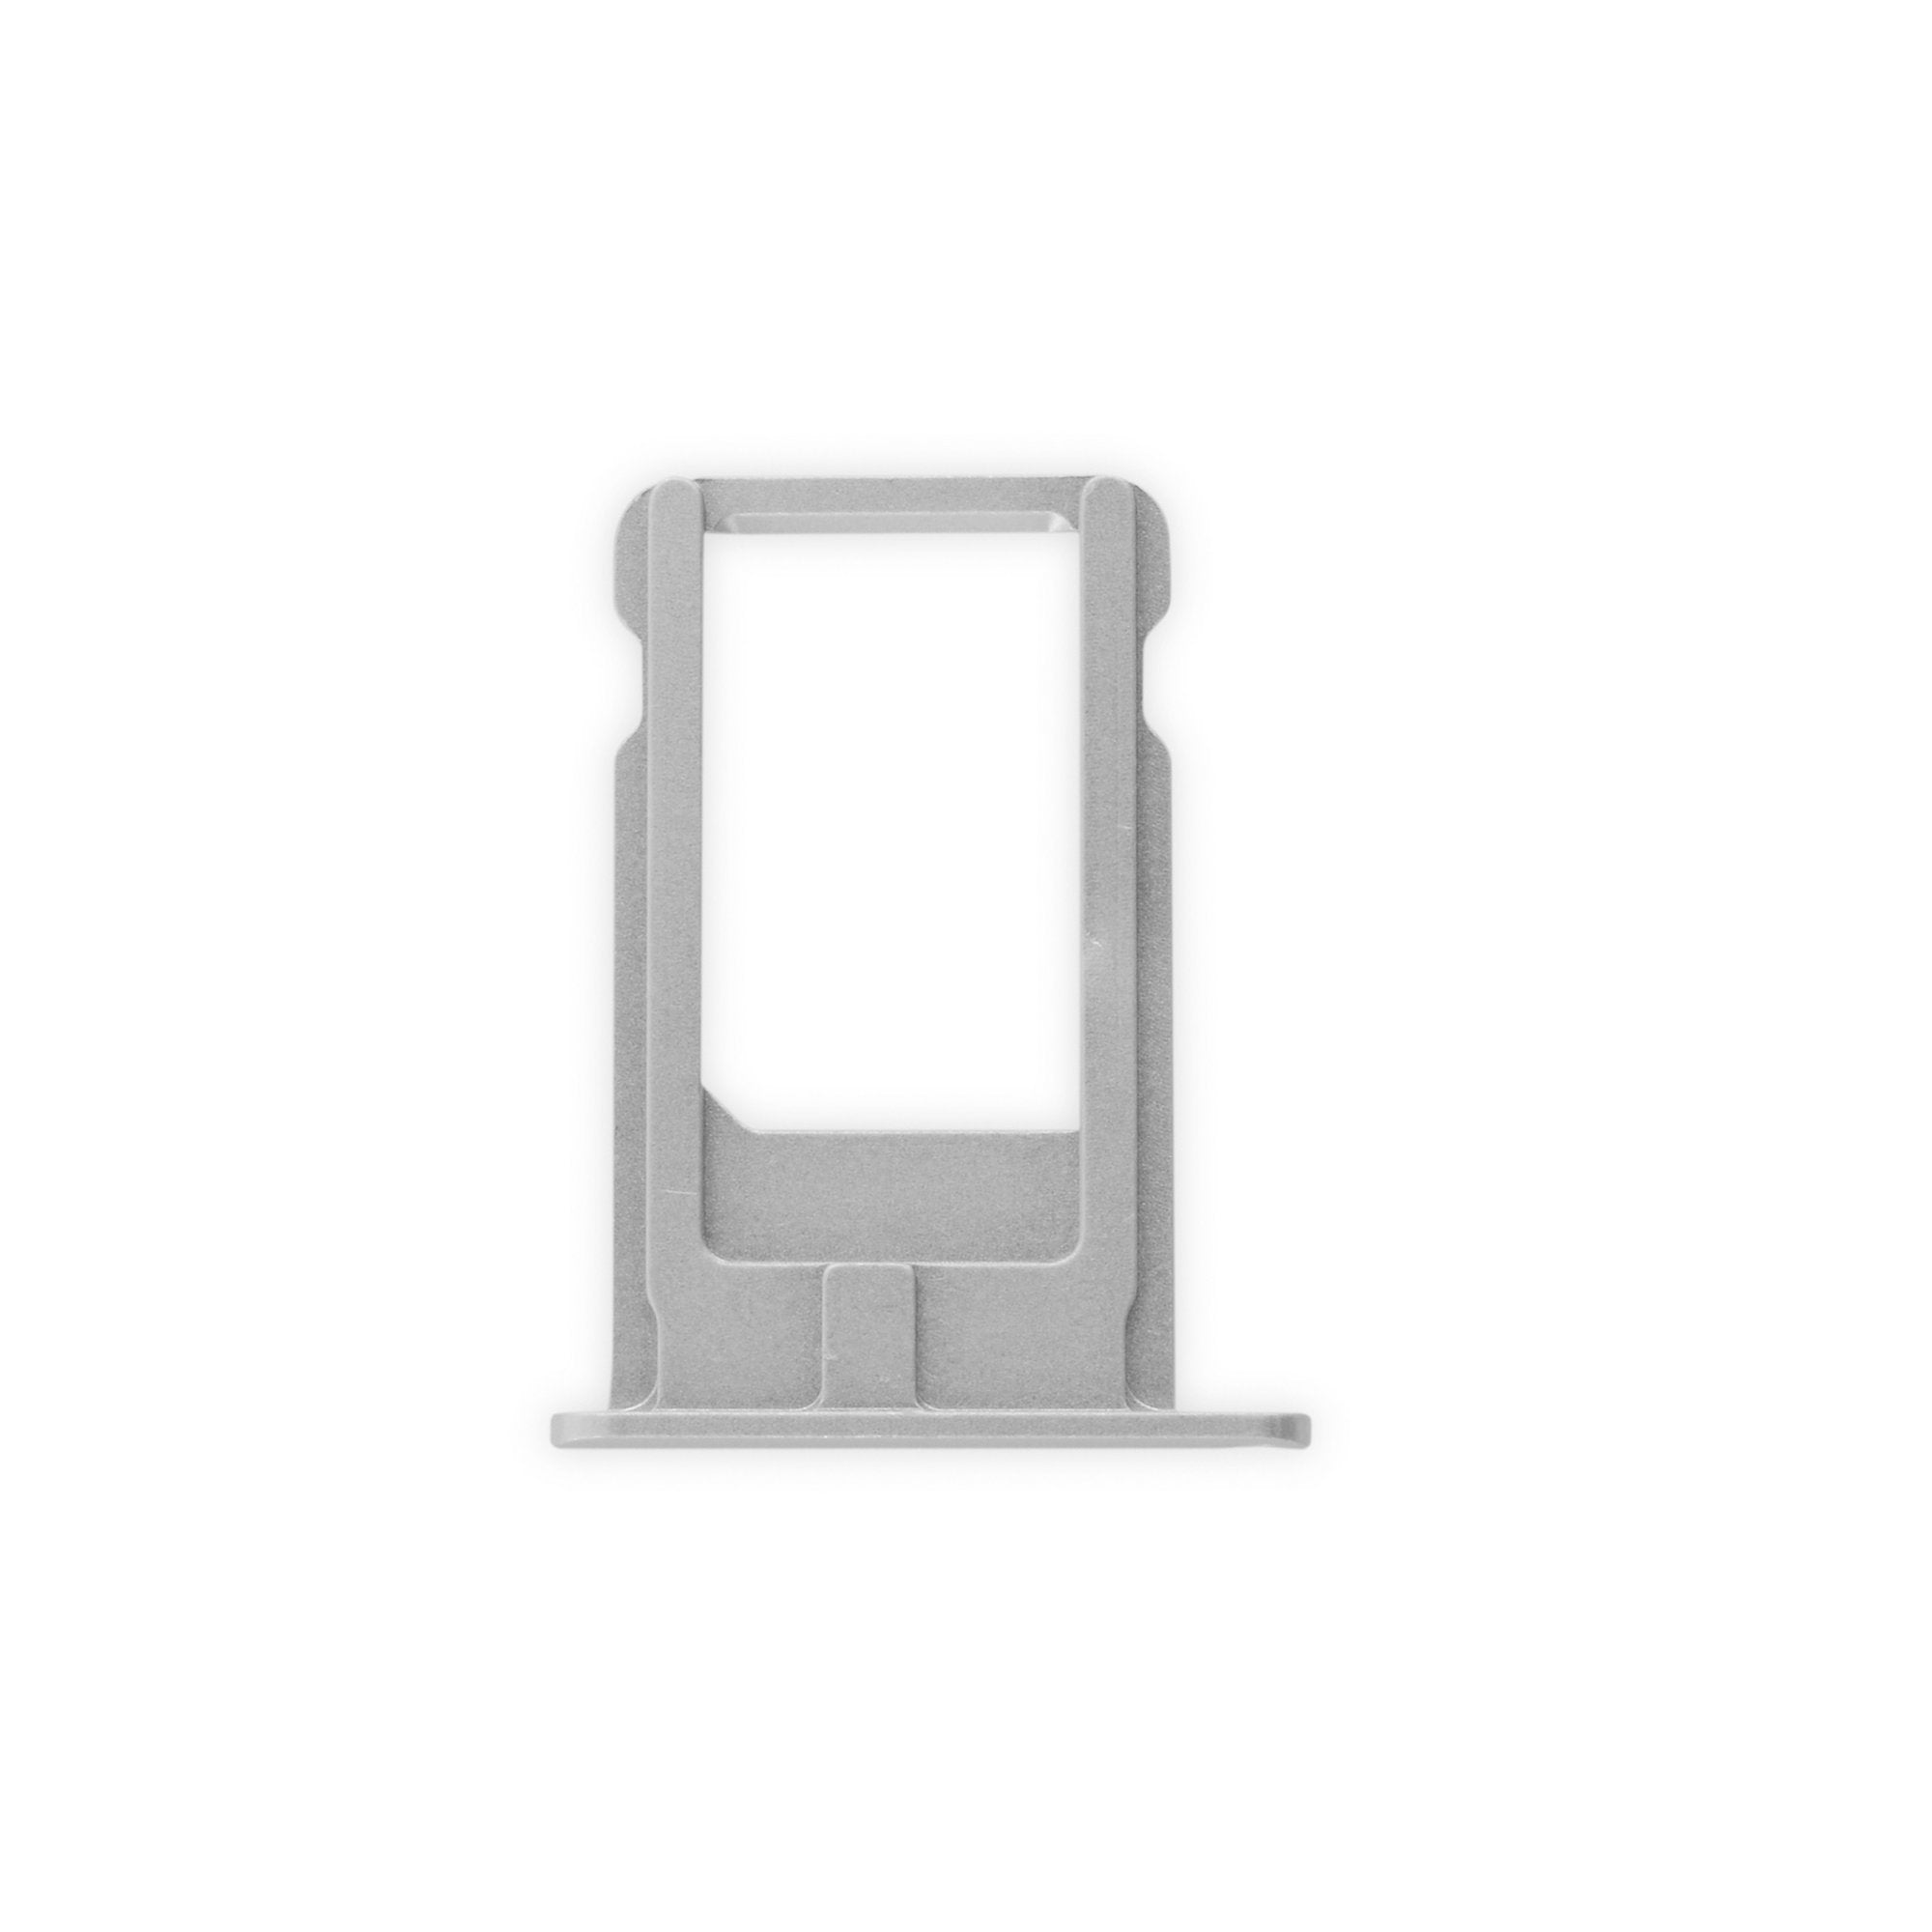 iPhone 6 Plus Nano SIM Card Tray Silver New